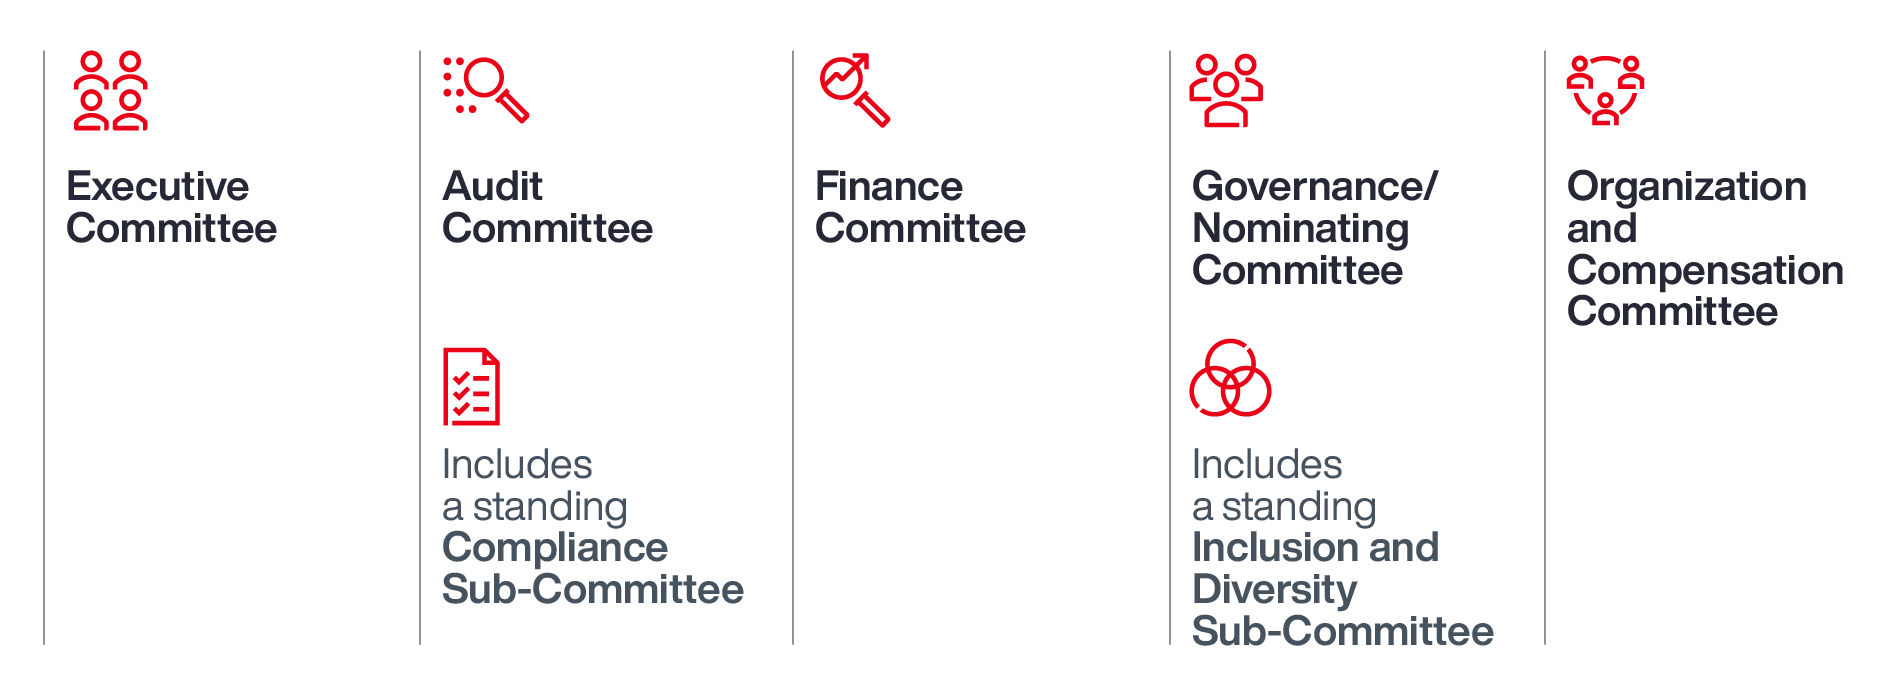 Aon's ESG Impact Report - Board of Directors